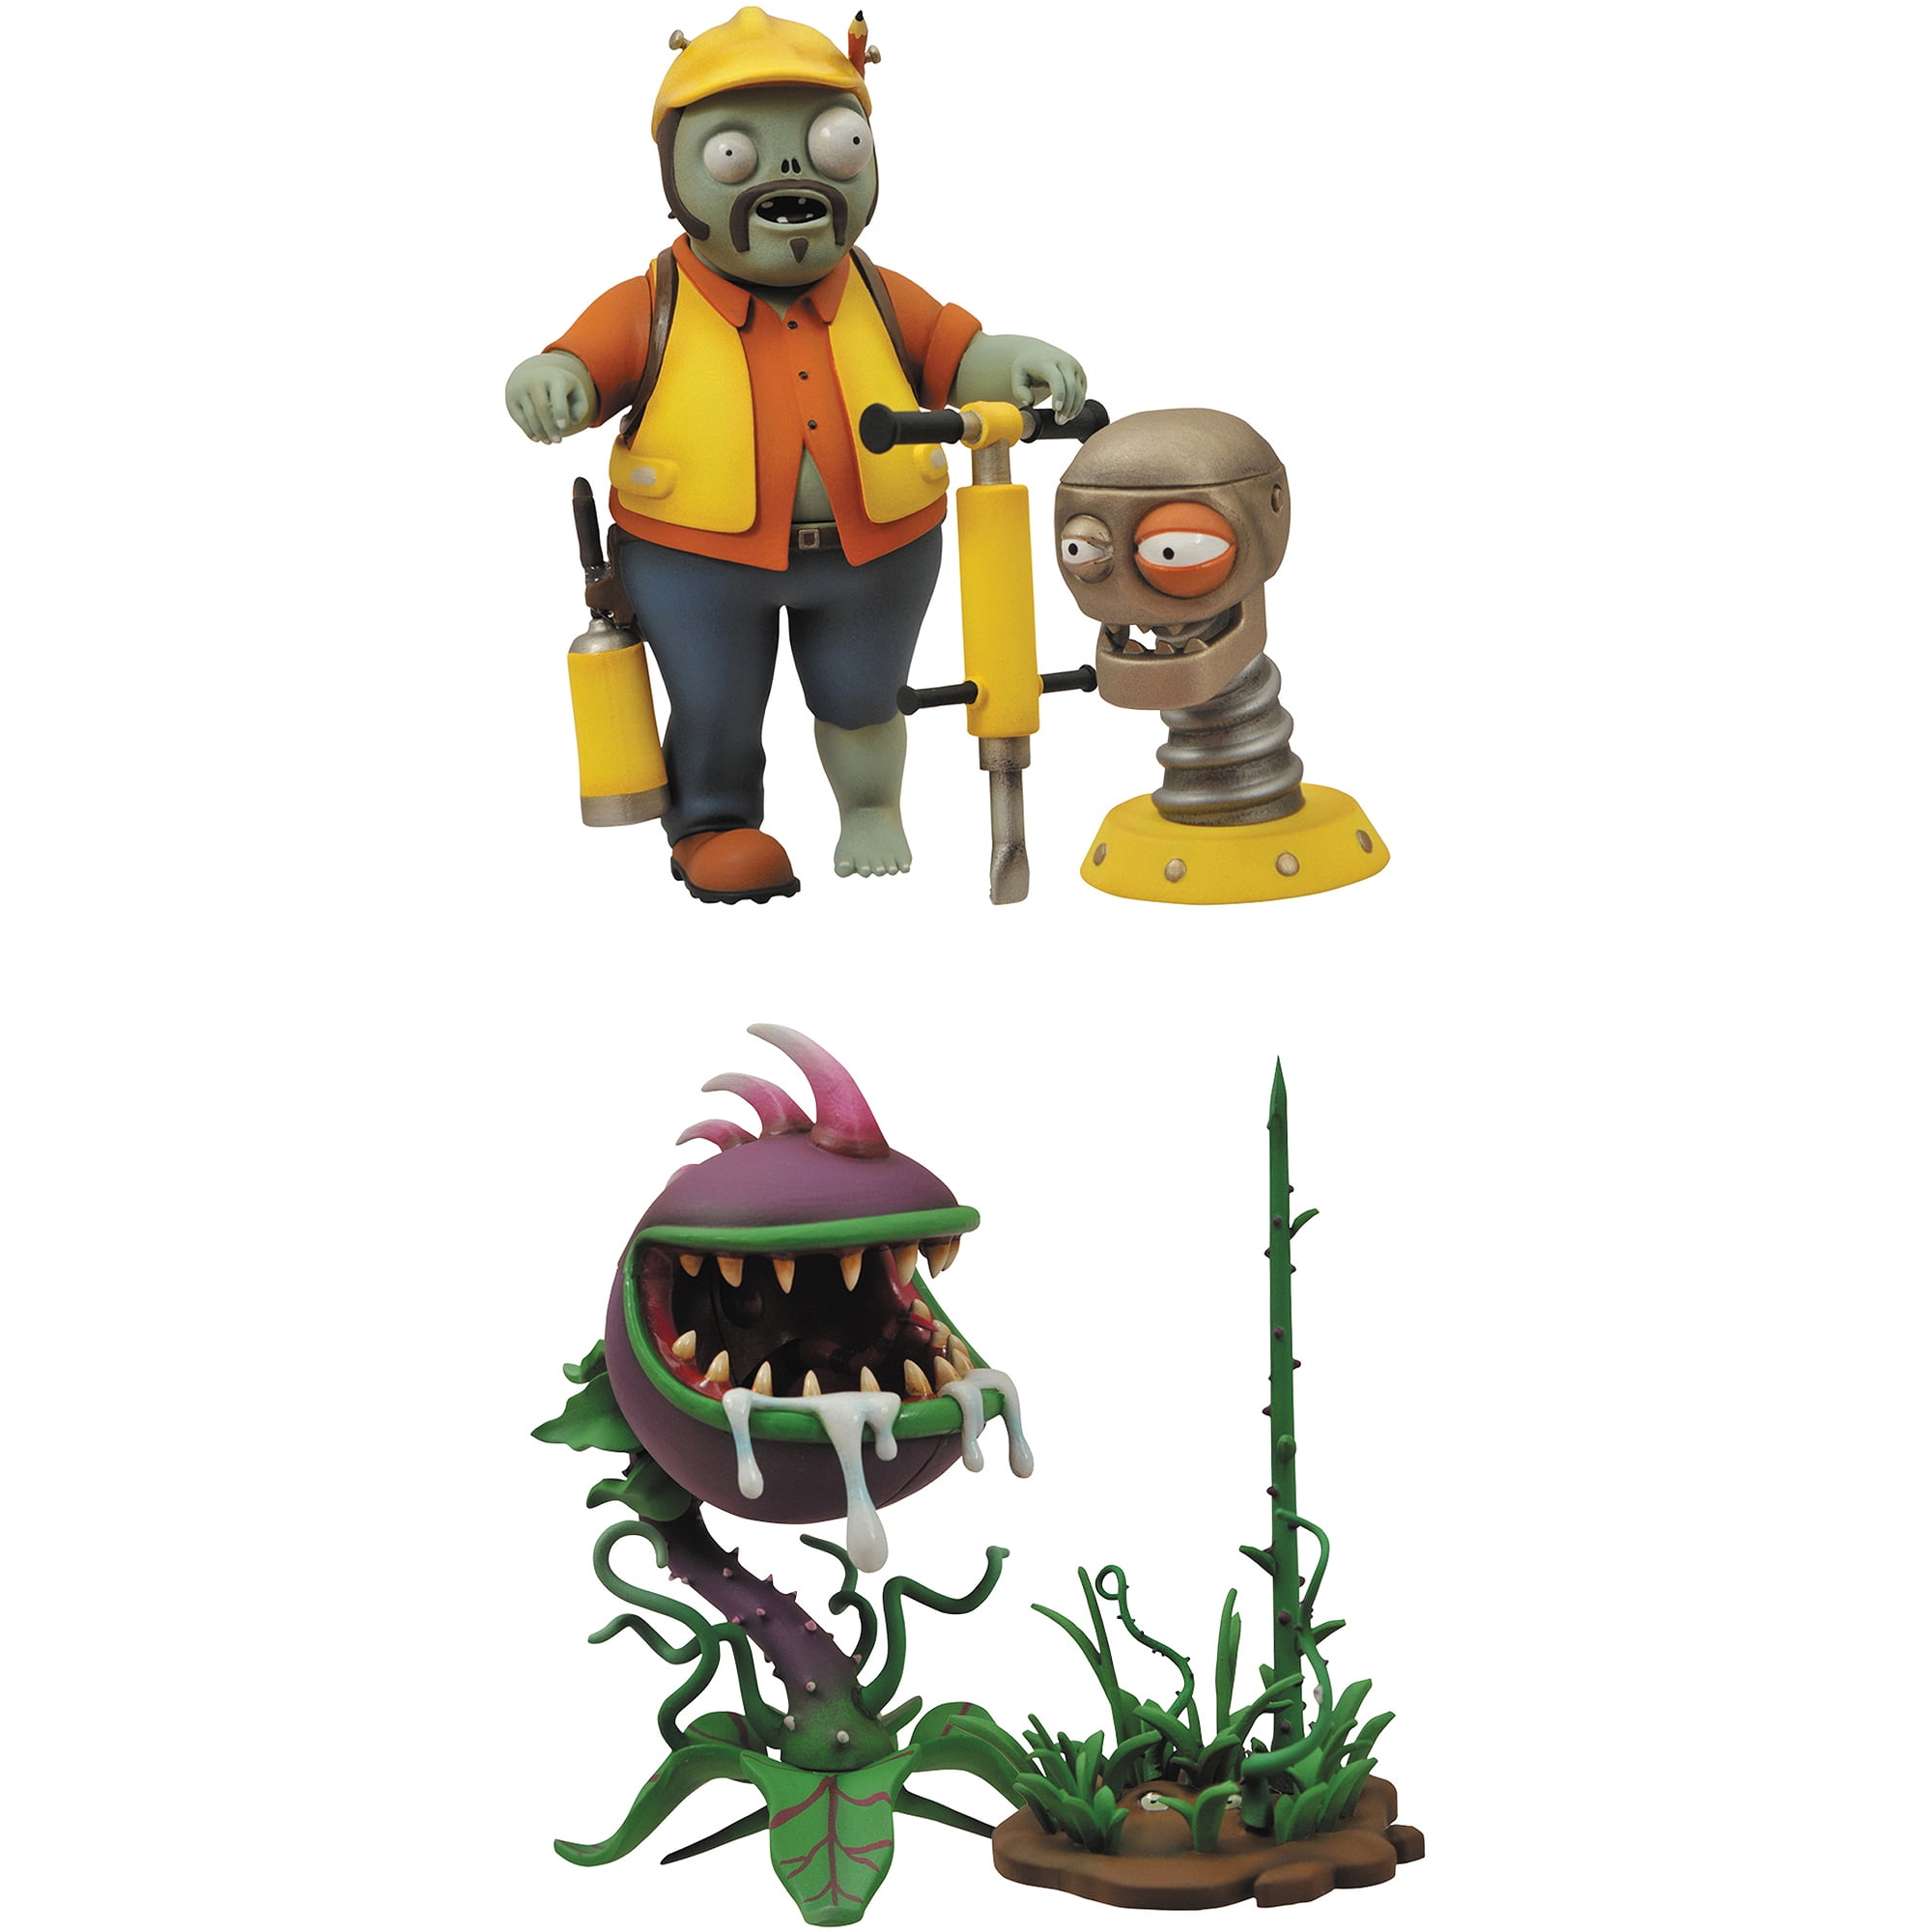 Plants vs. Zombies Garden Warfare Action Figure 2-Pack Set